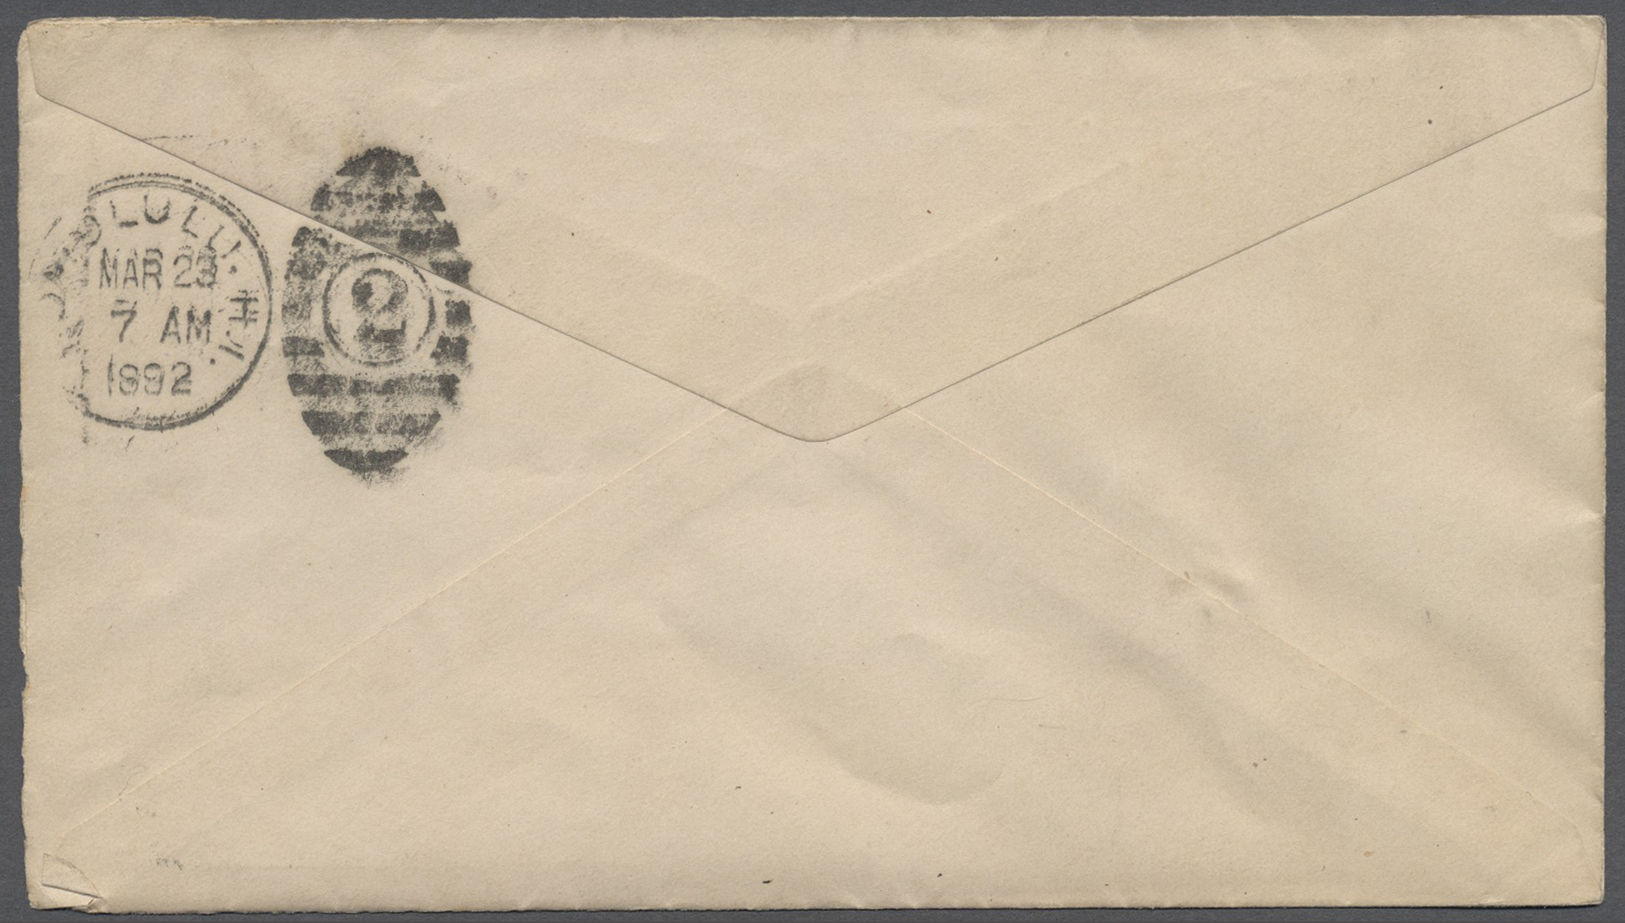 GA Hawaii - Ganzsachen: 1892, 2 C. Red Postal Stationery Envelope Tied By "KOHALA HAWAII MAR/22/1892" Cds., HONOLULU Arr - Hawaii